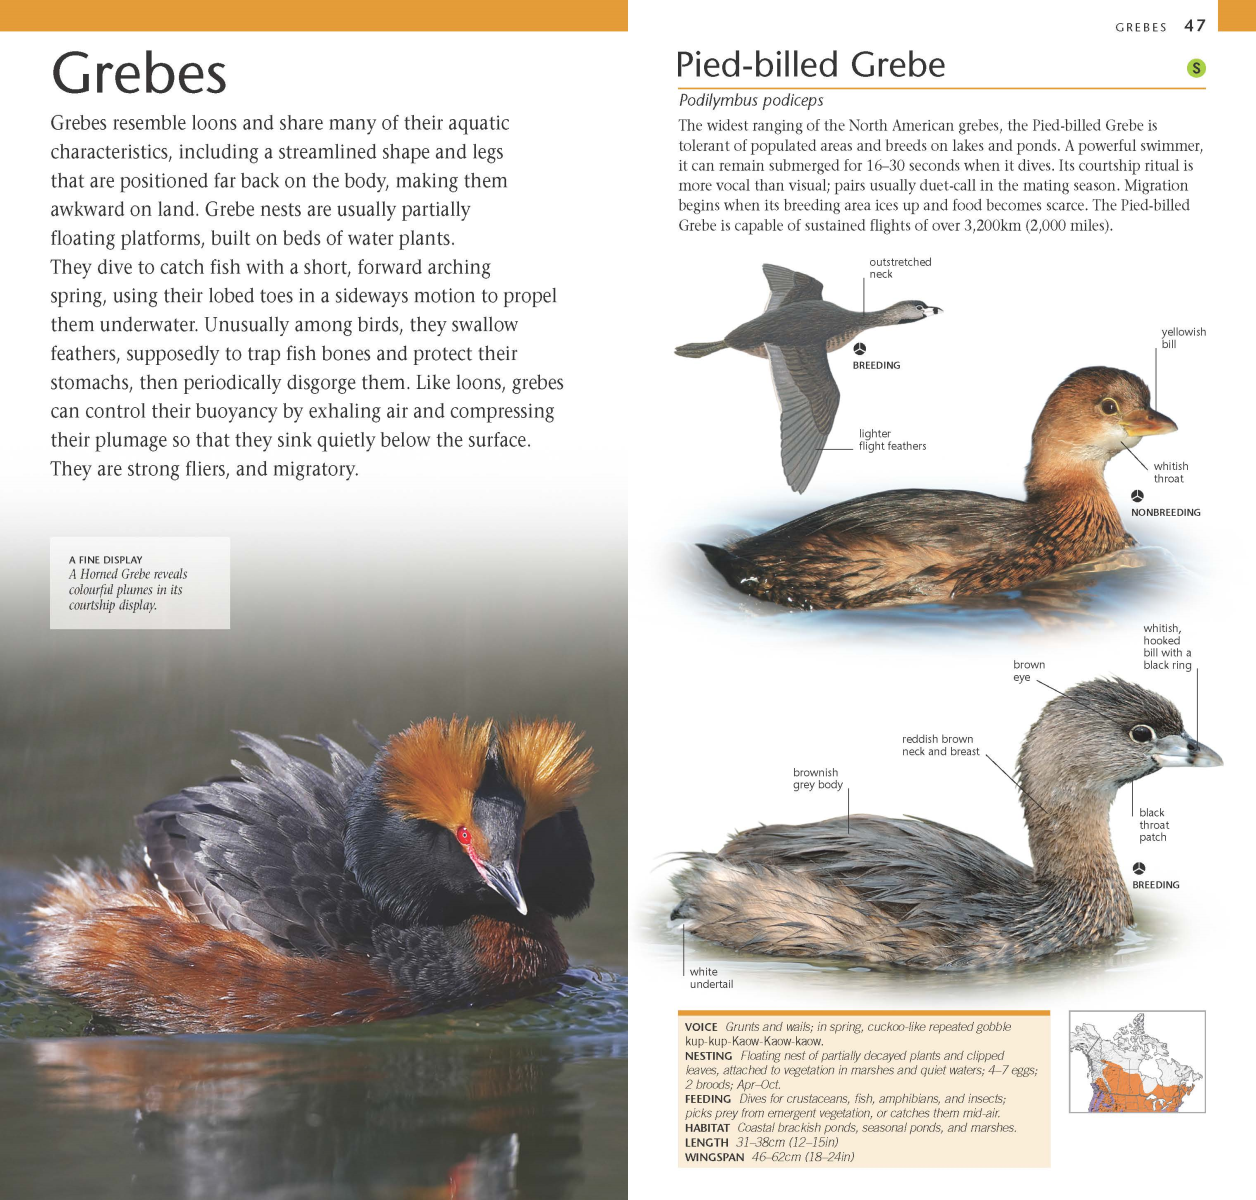 Pocket Birds of Canada 2nd Edition